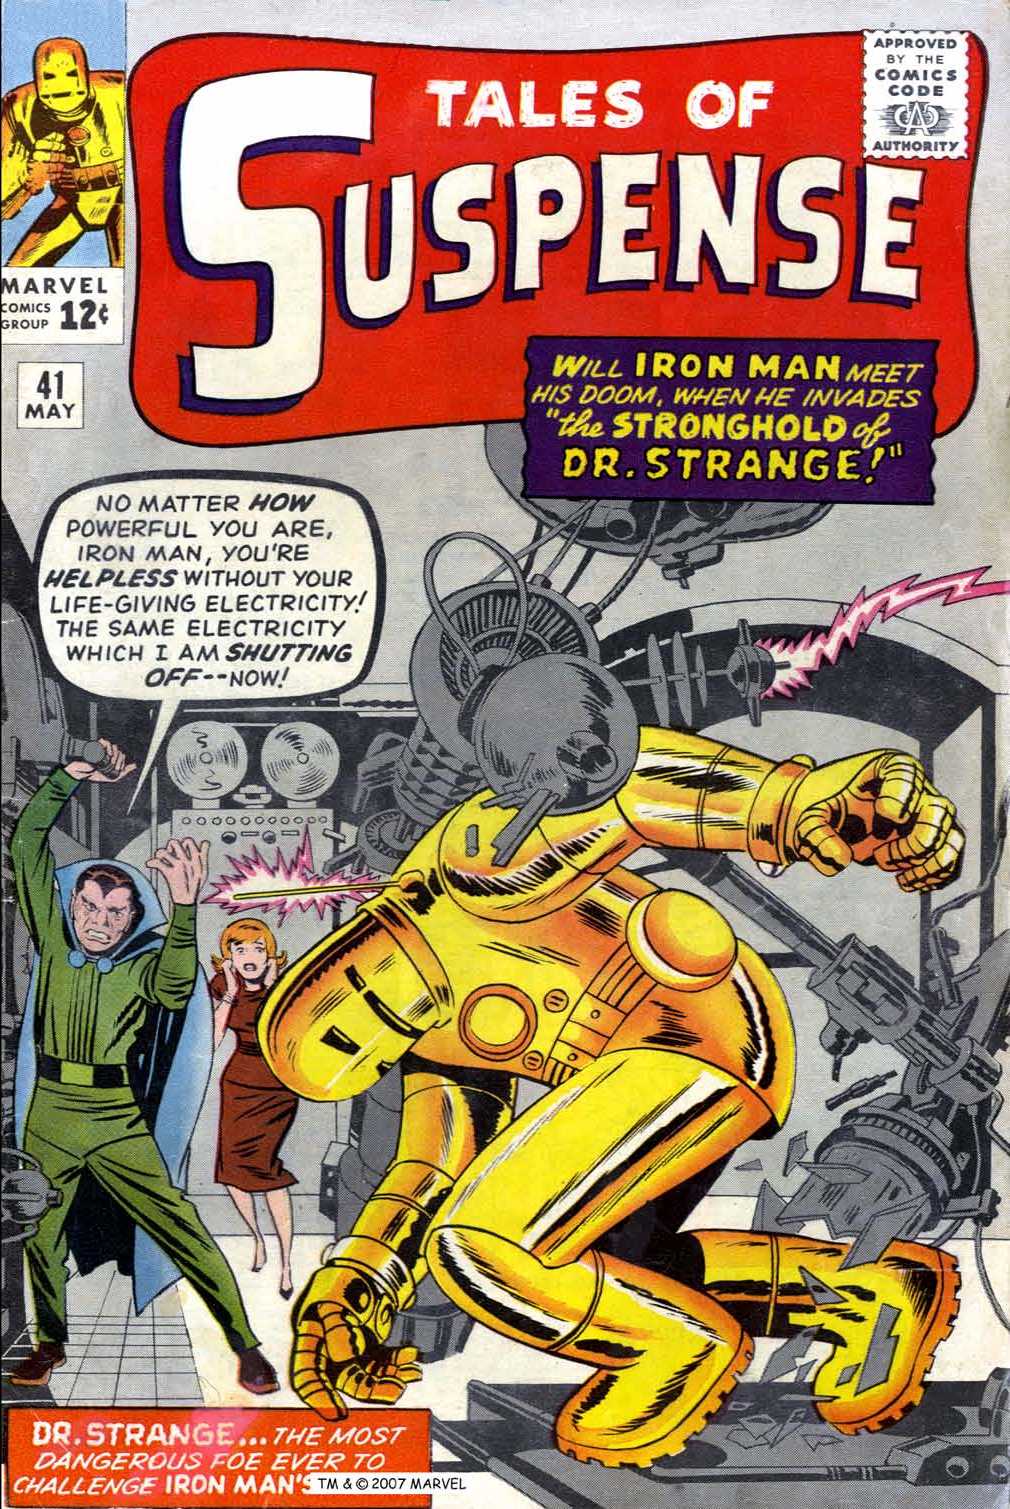 TOS#41 - Iron Man vs Dr Strange